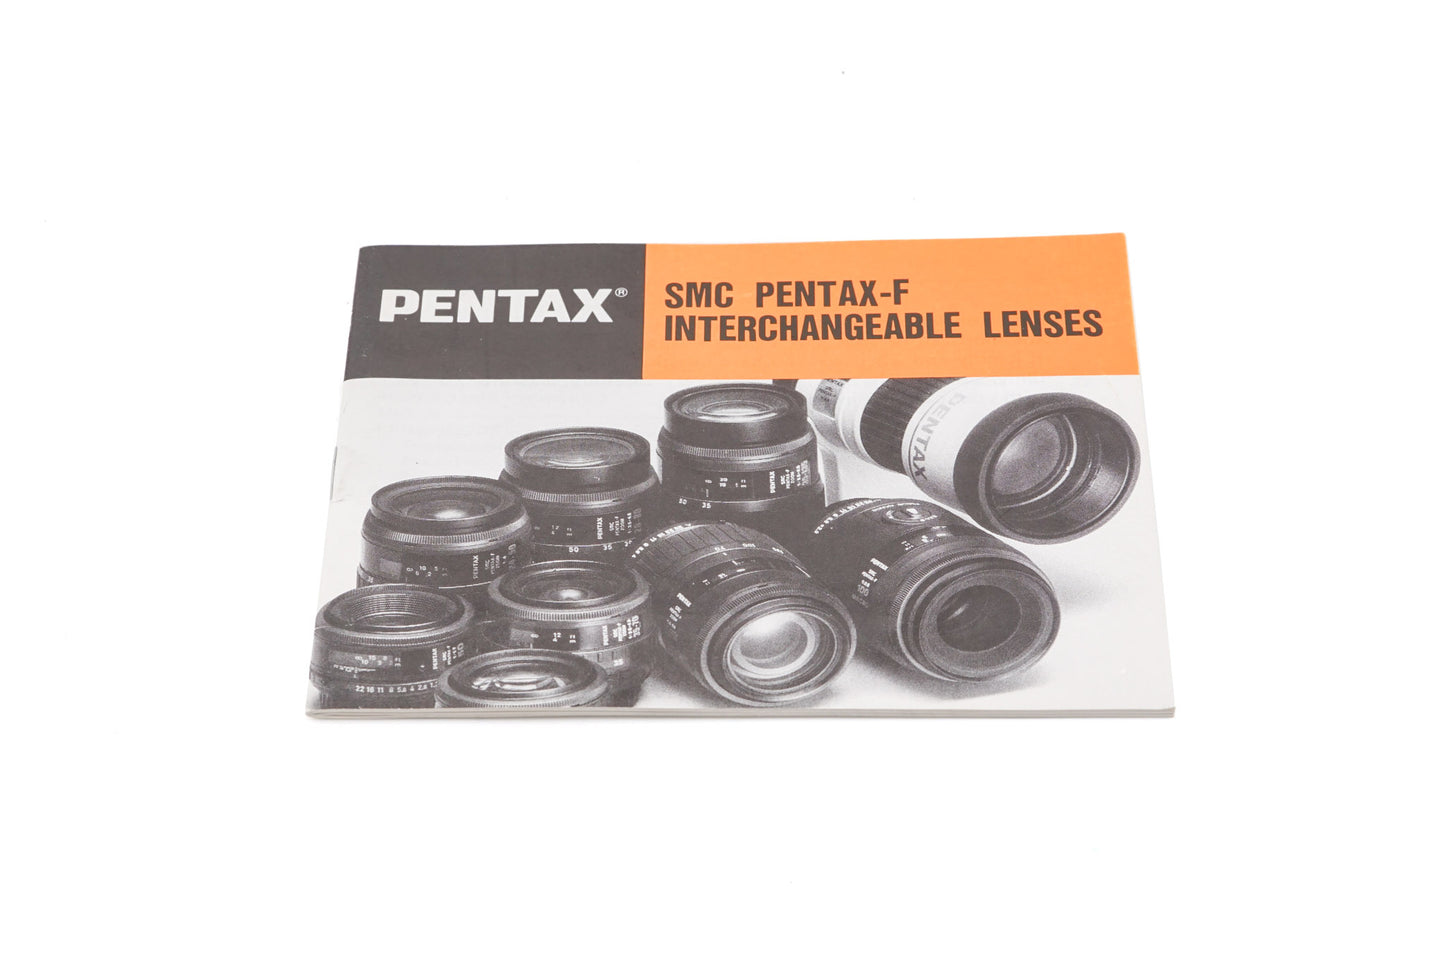 Pentax SMC Pentax-F Interchangeable Lenses Brochure